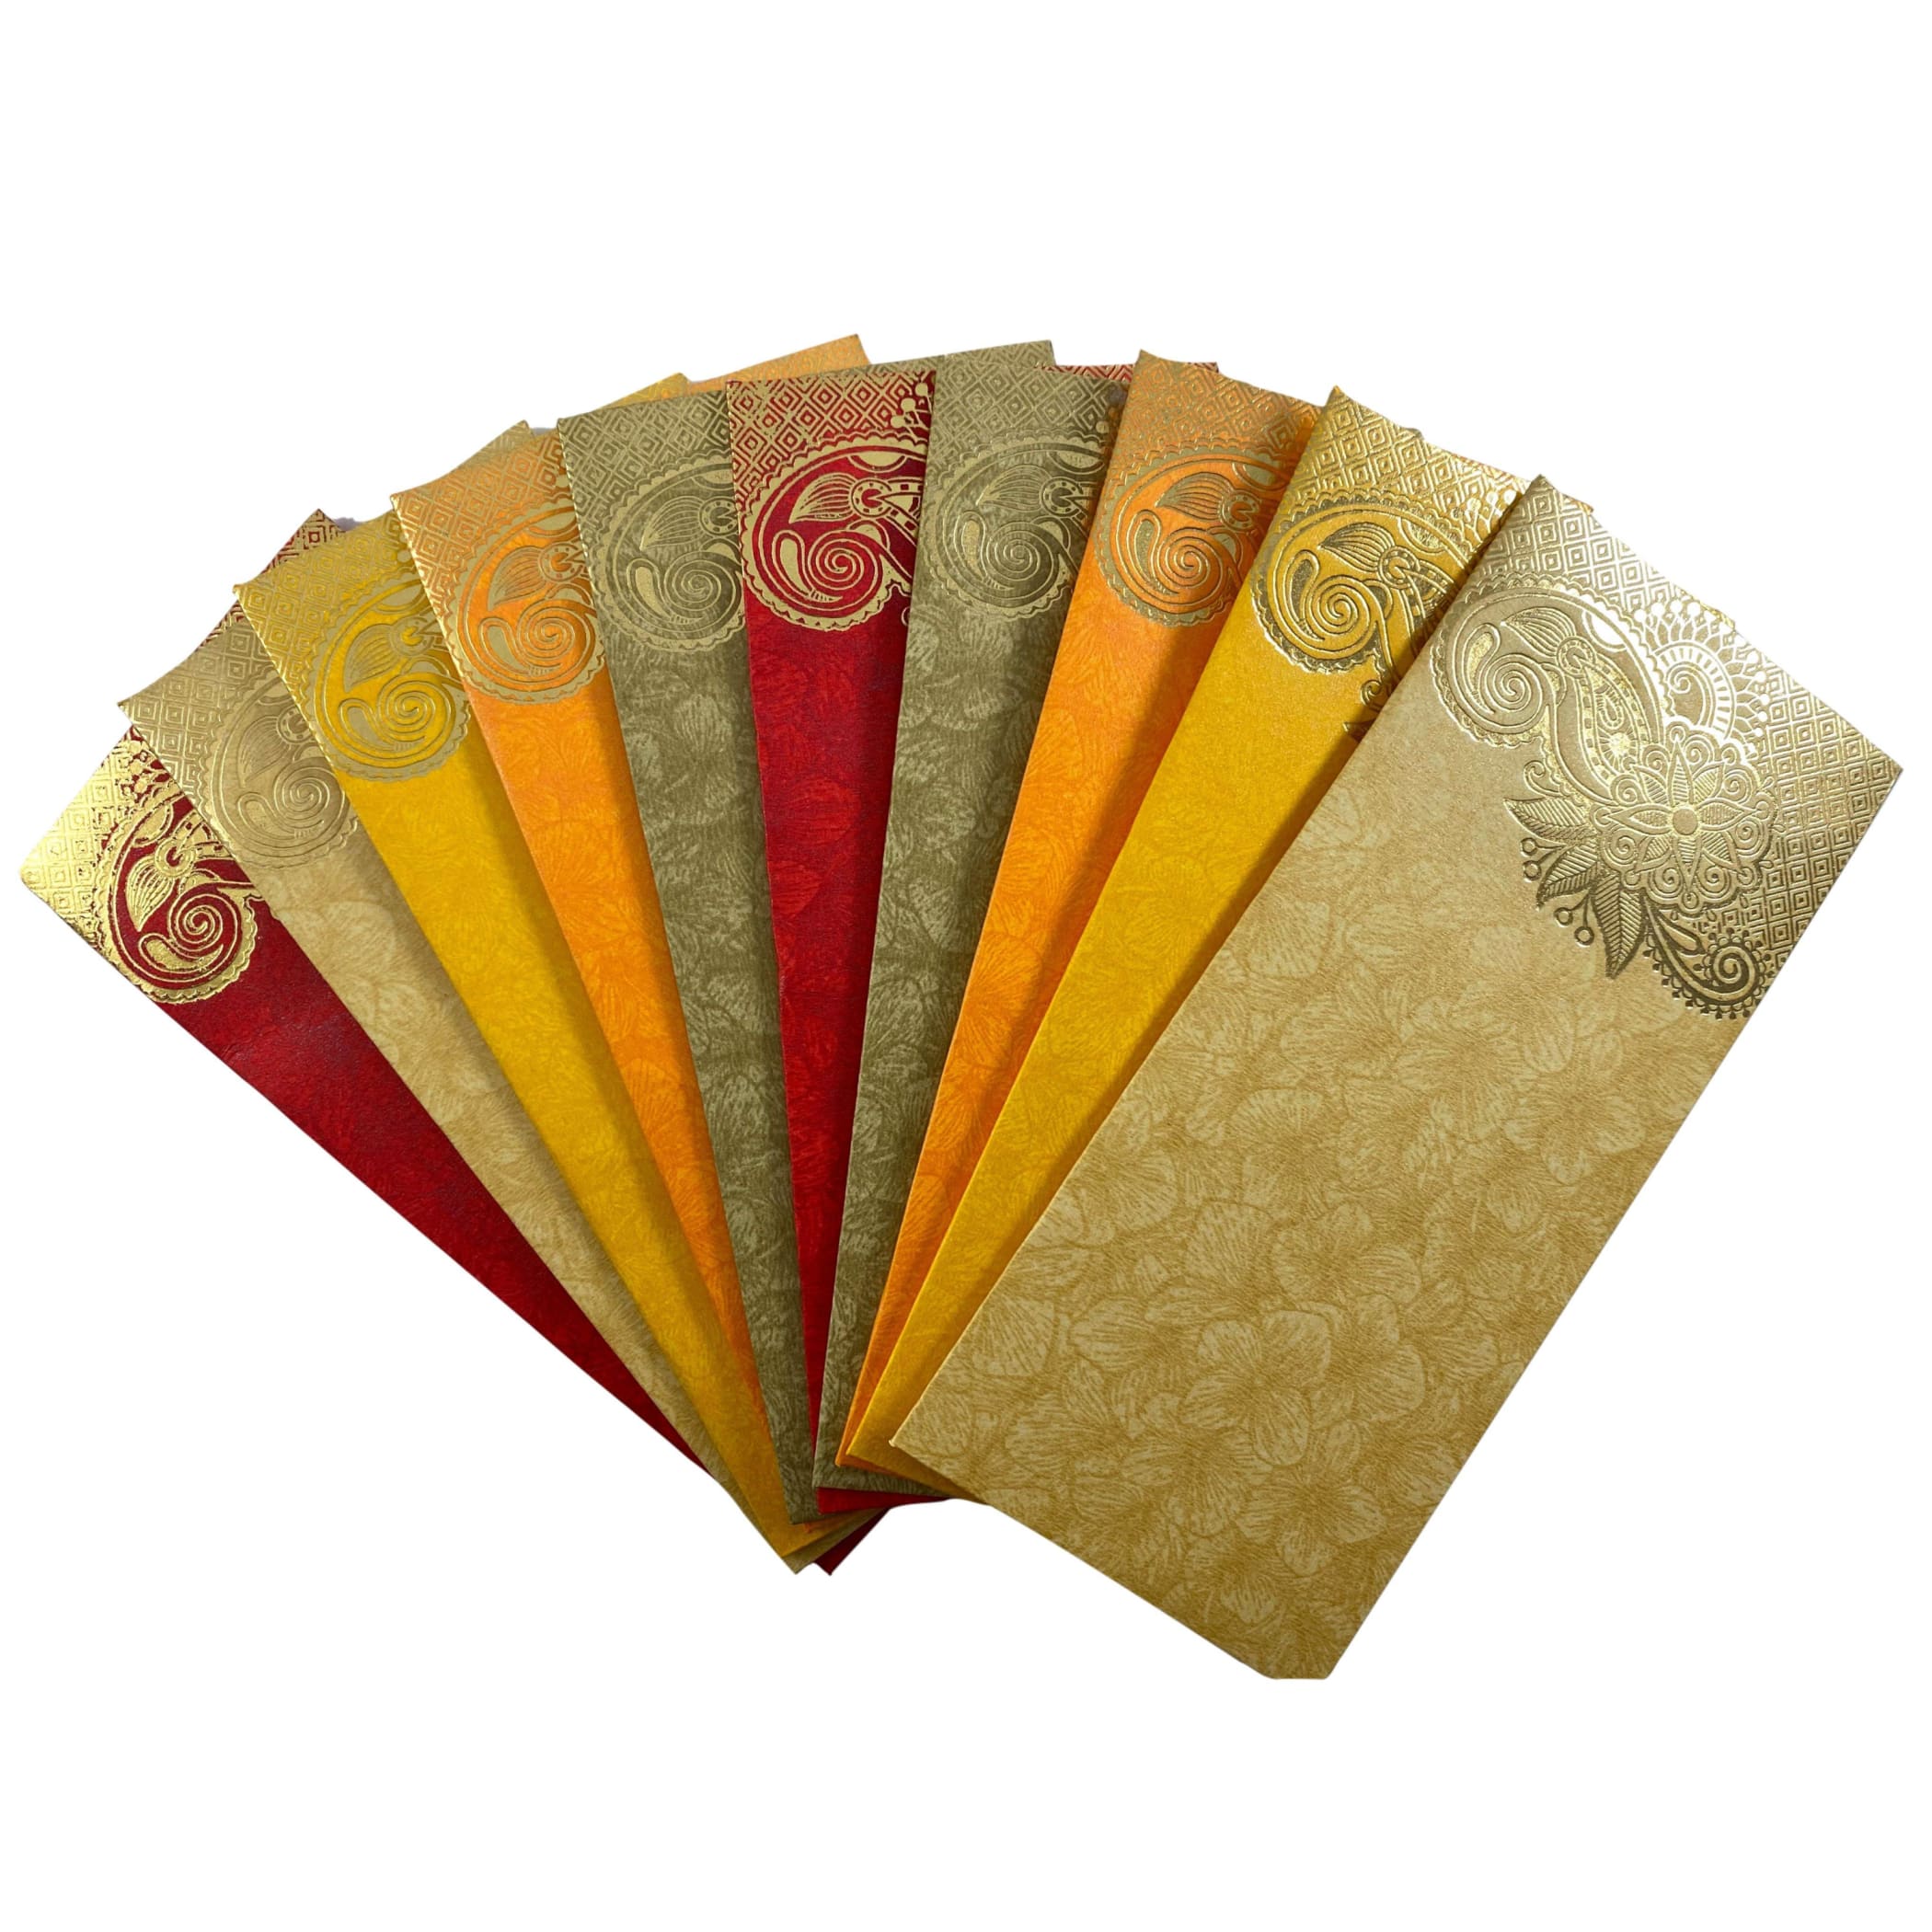 Pack of 10 assorted paisley paper shagun money envelopes